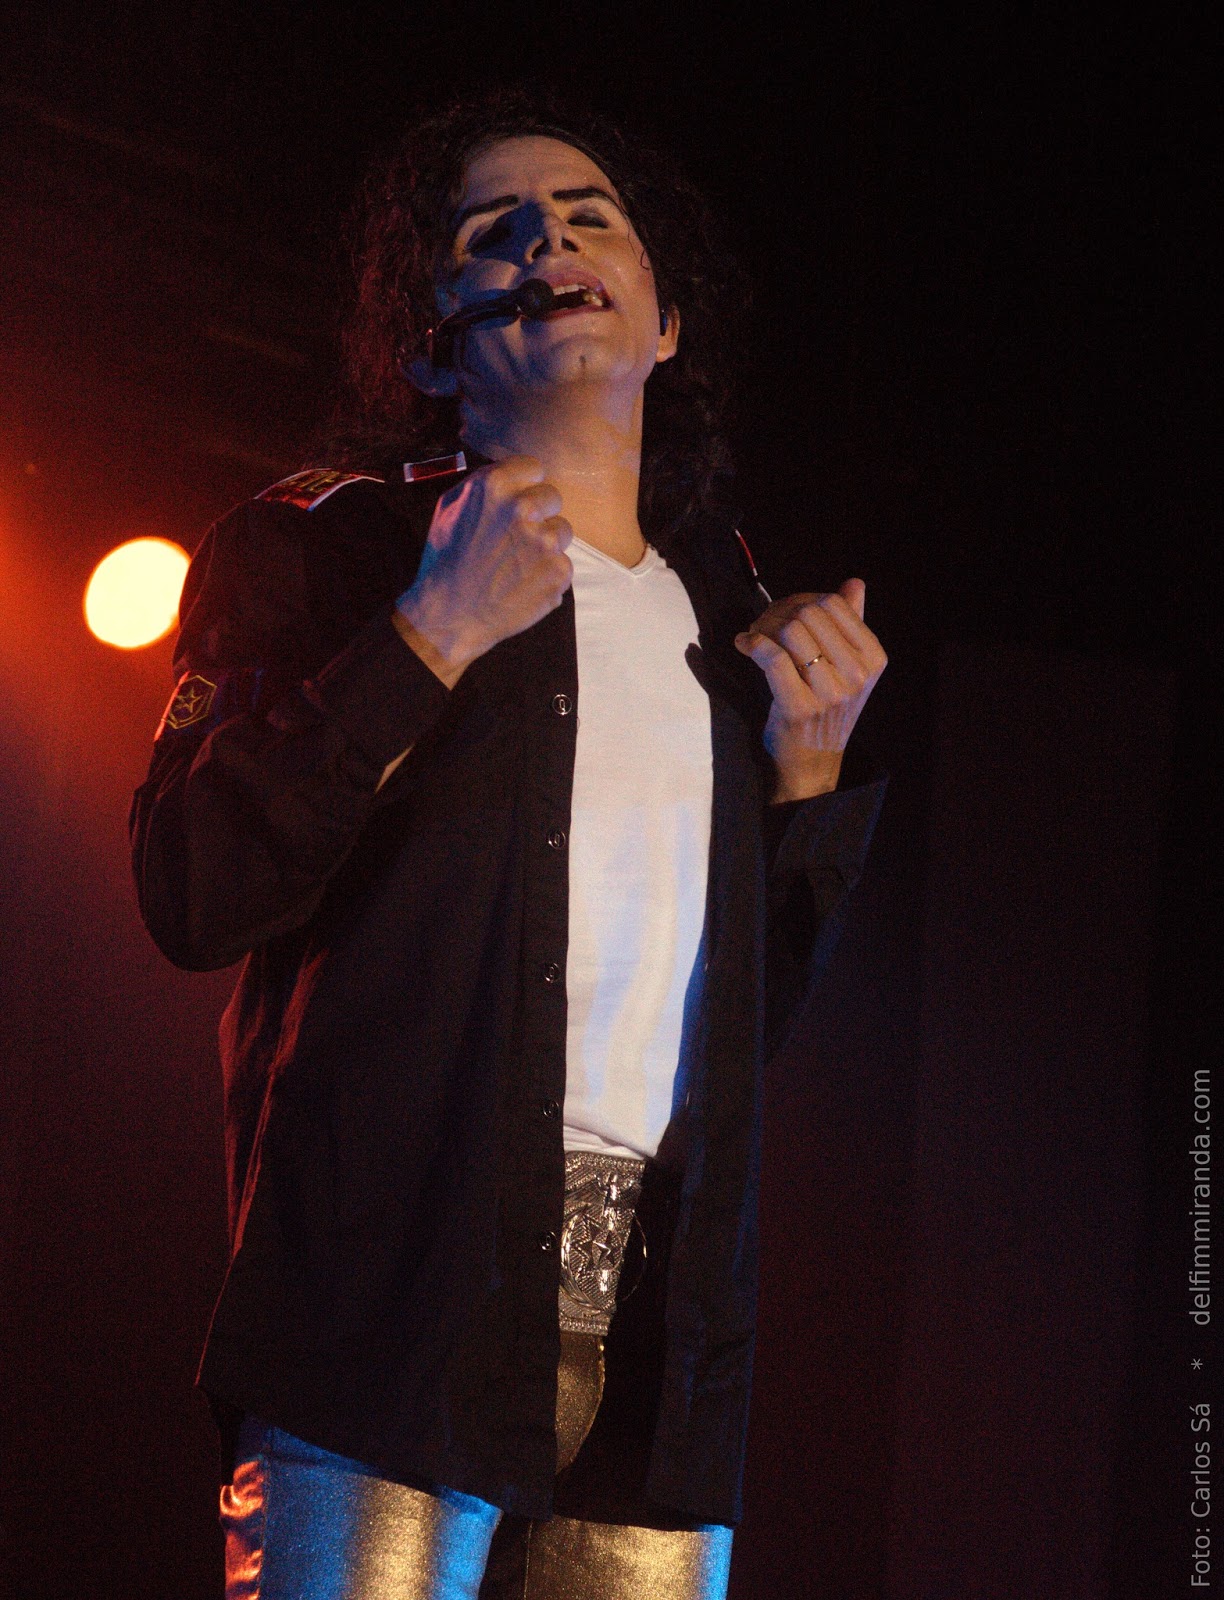 Delfim Miranda - Michael Jackson Tribute - Man in the Mirror - Live on Stage